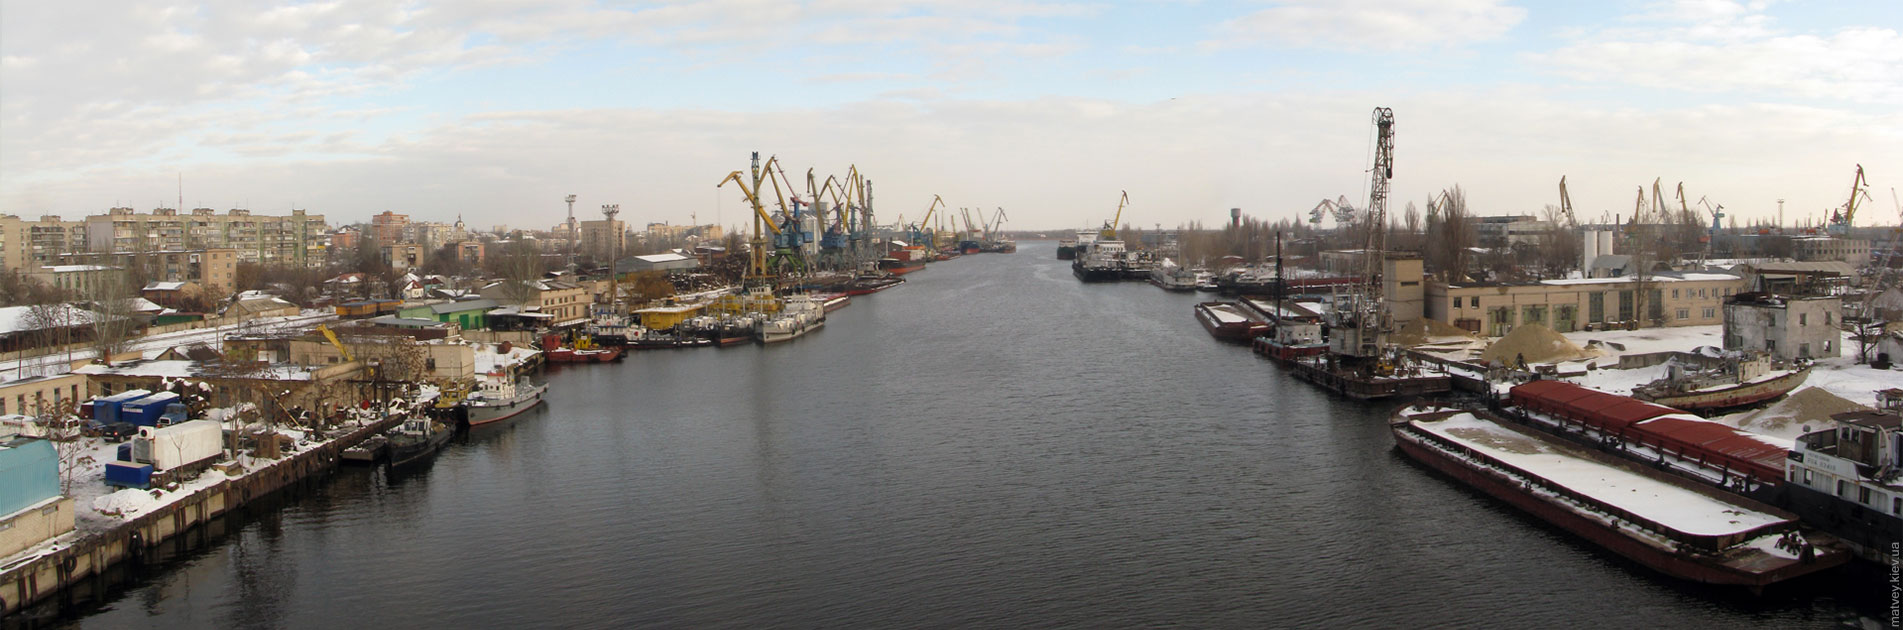 Панорама. Вид з мосту на порт та річку Кошову. Зима. Херсон, Україна.